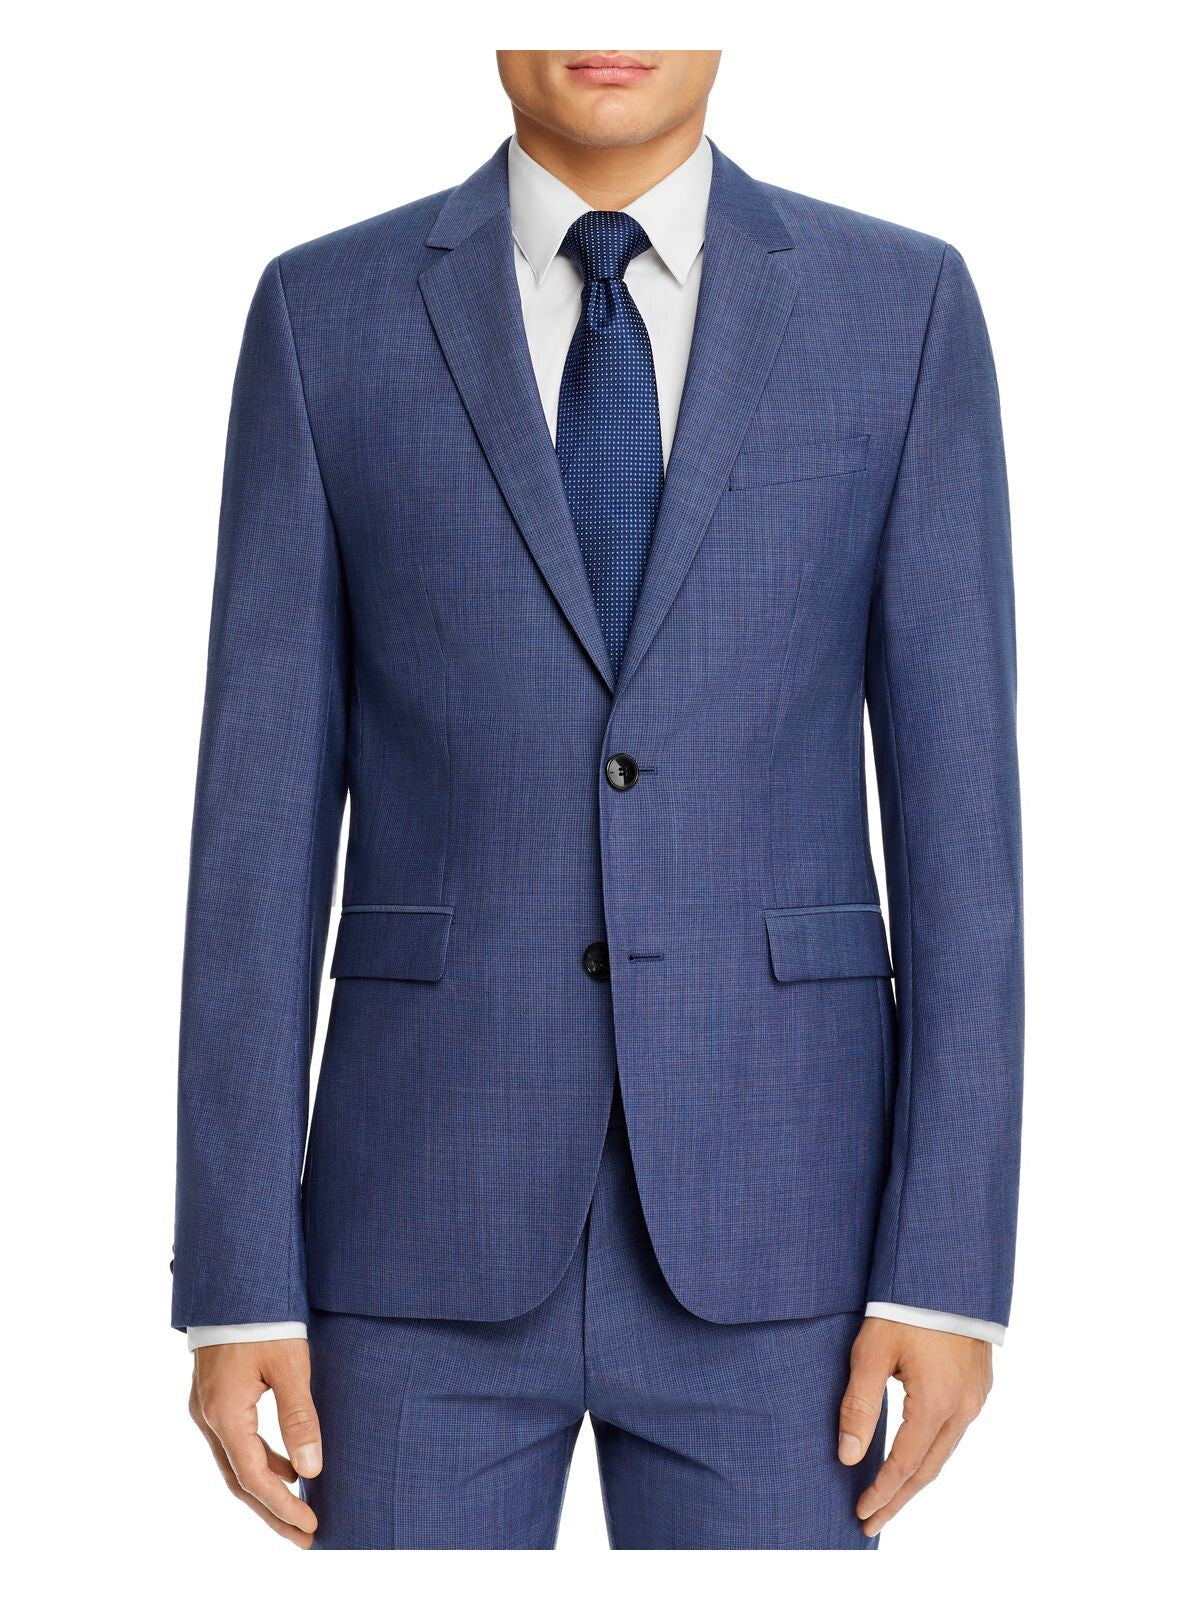 HUGO BOSS Mens Blue Single Breasted, Wool Blend Suit Jacket 38S